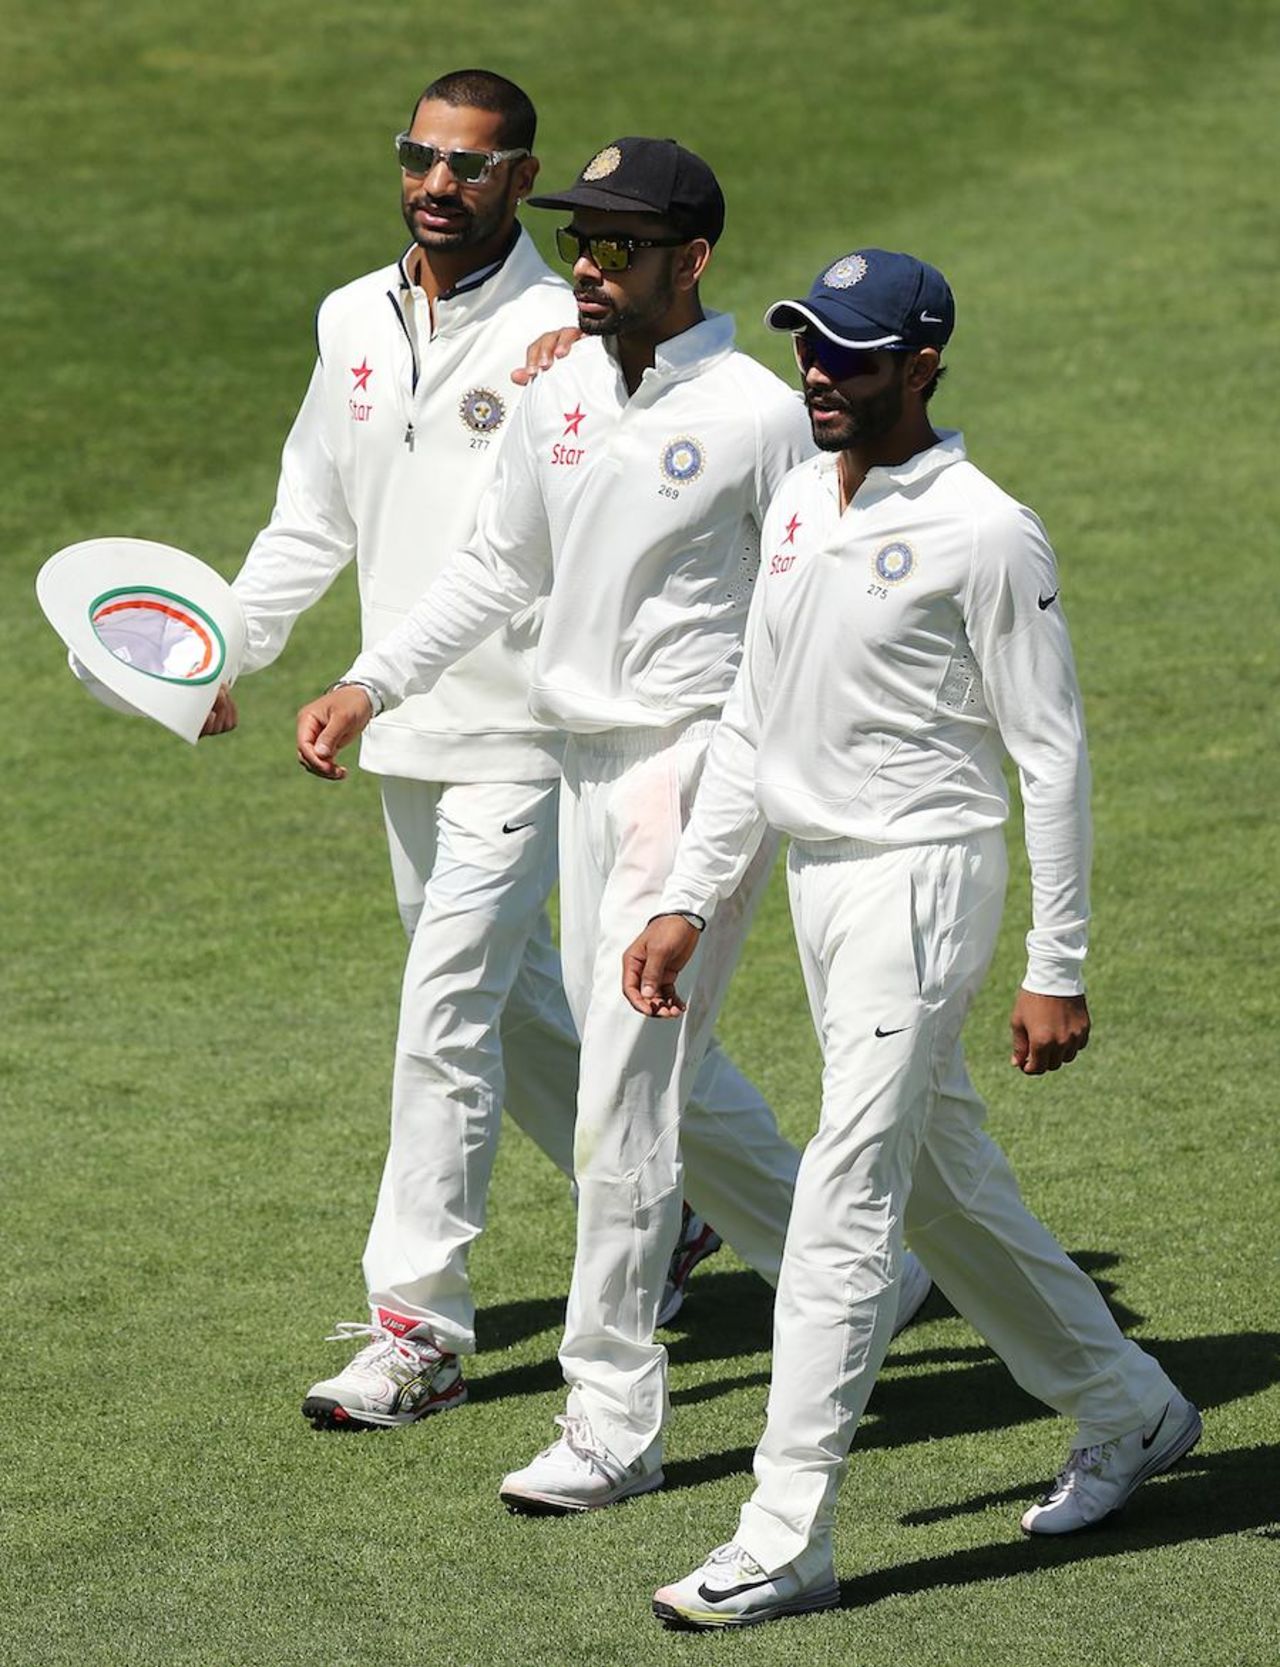 Shikhar Dhawan, Virat Kohli and Ravindra Jadeja walk off the field, Cricket Australia XI v Indians, Gliderol Stadium, Adelaide, 1st day, November 24, 2014